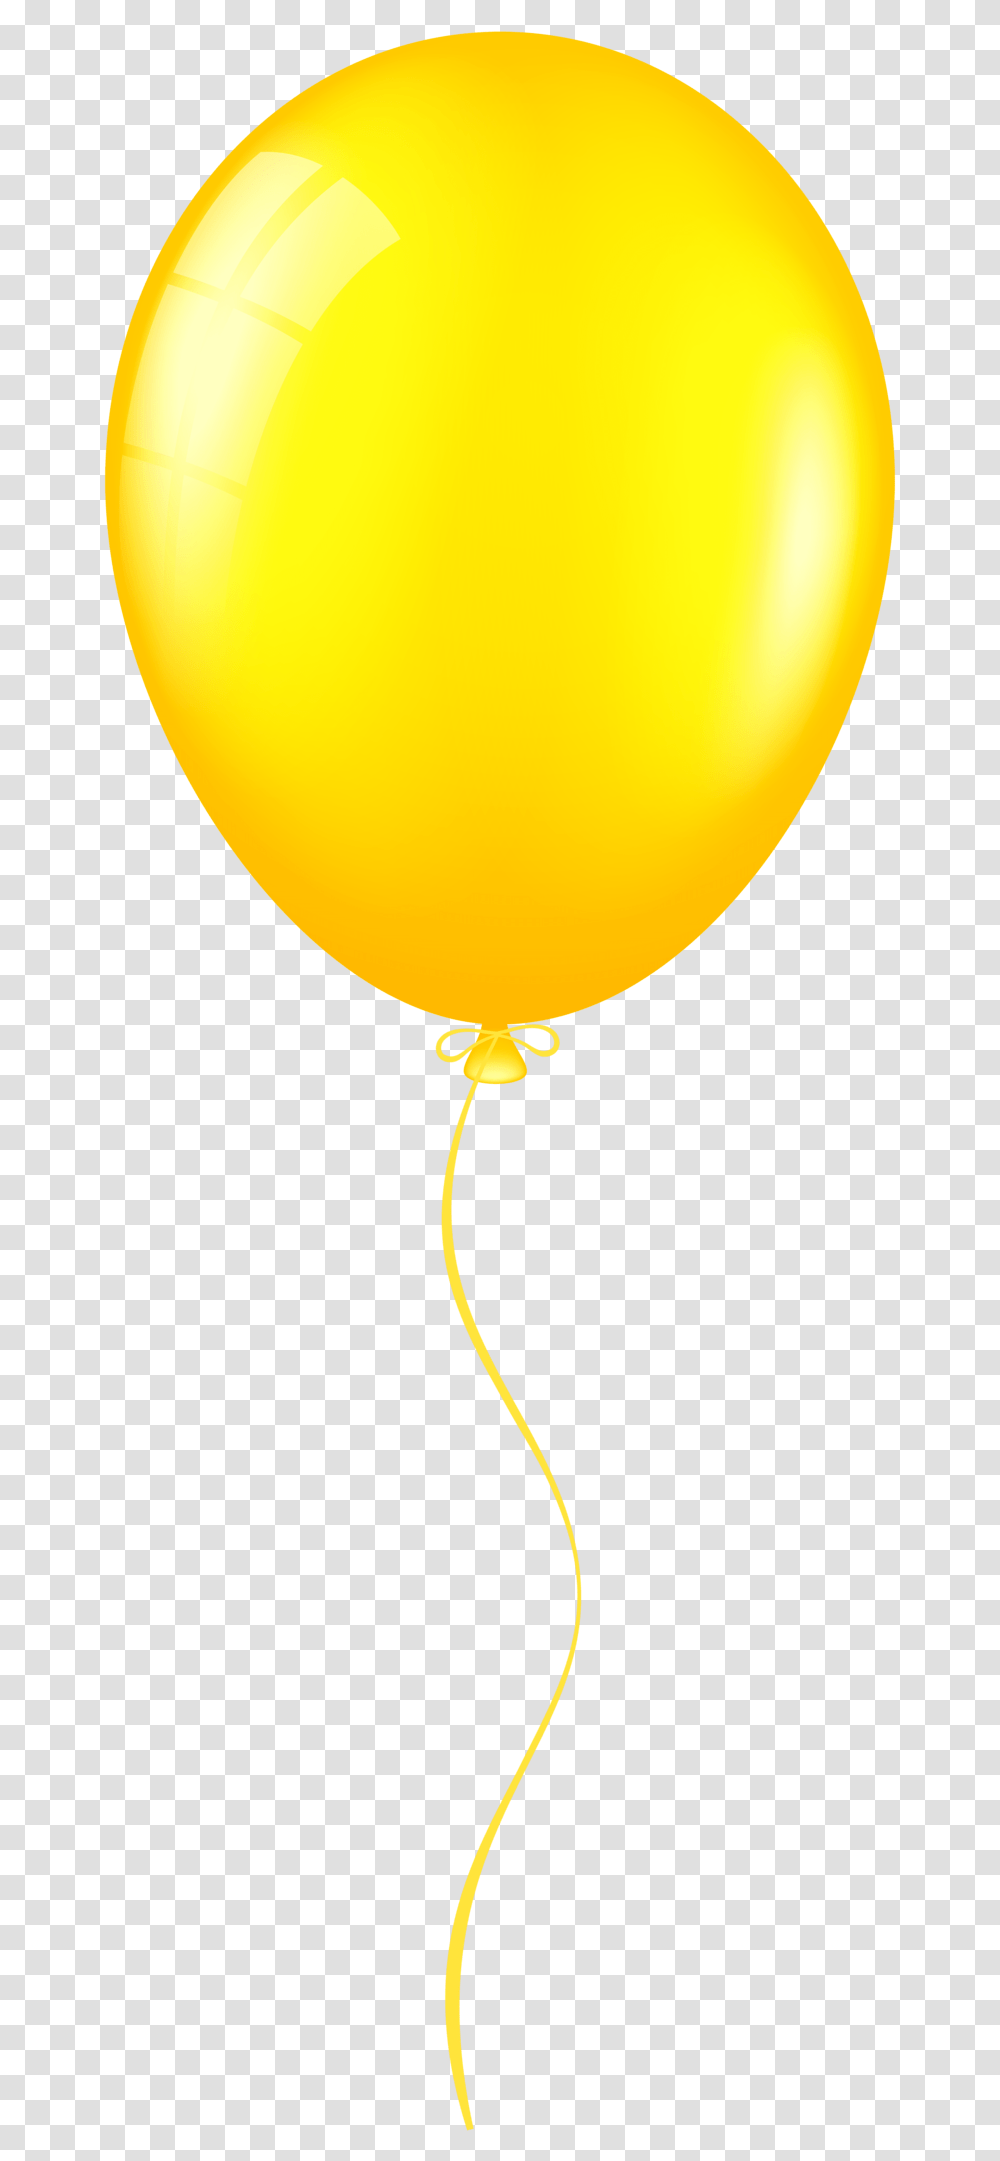 Download Free Dlpng Com Yellow Balloon Clip Arts Transparent Png